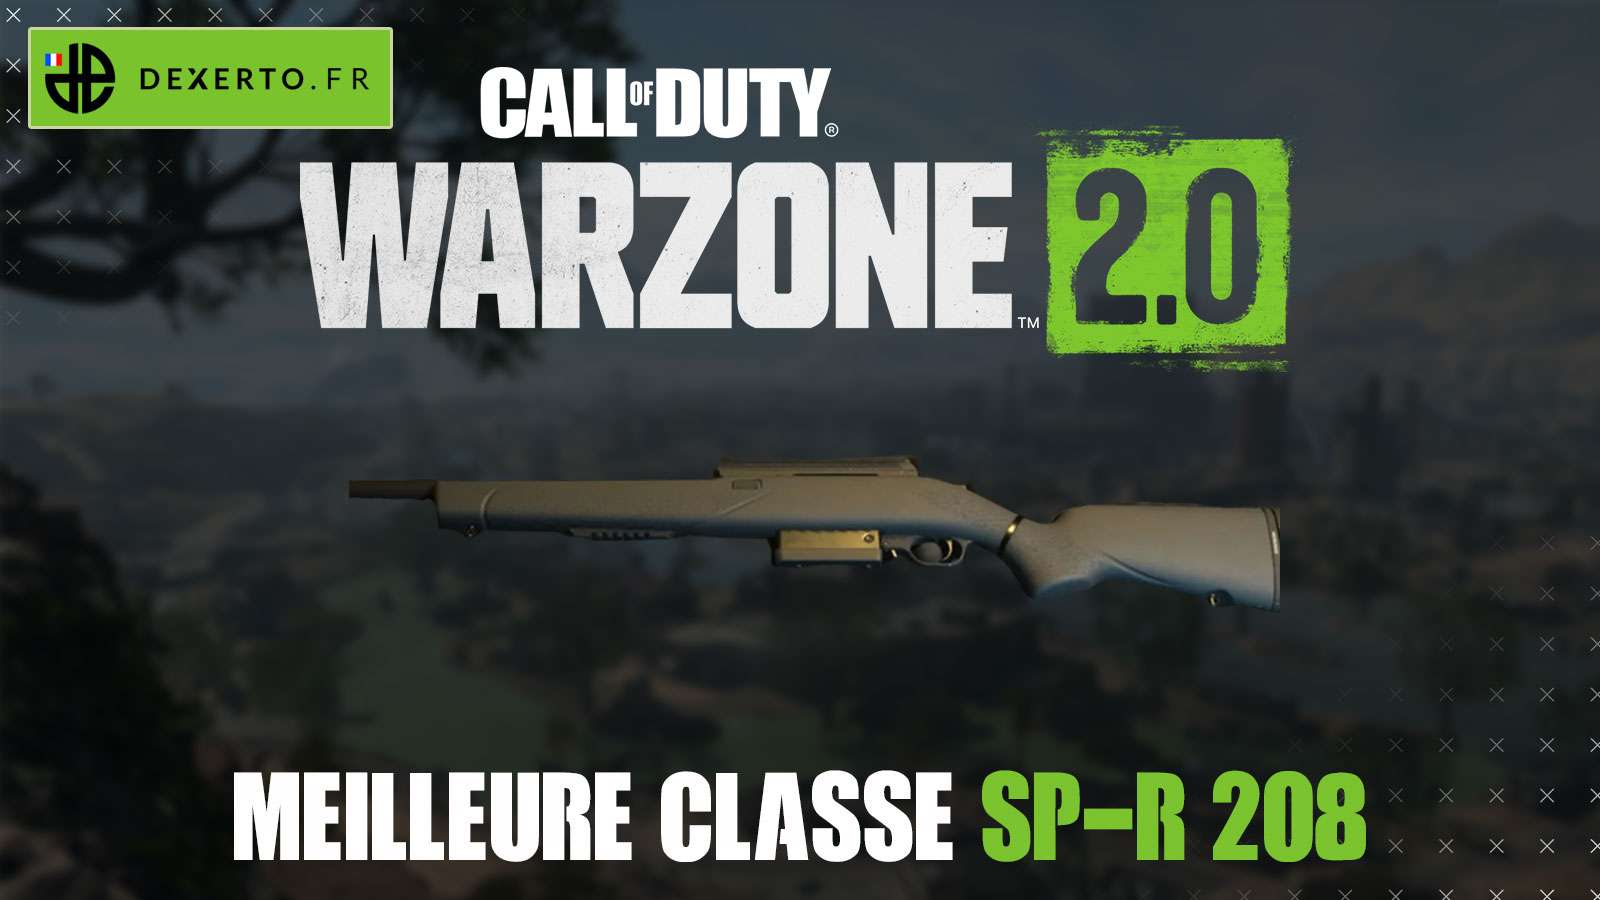 Warzone 2 SP-R 208 classe